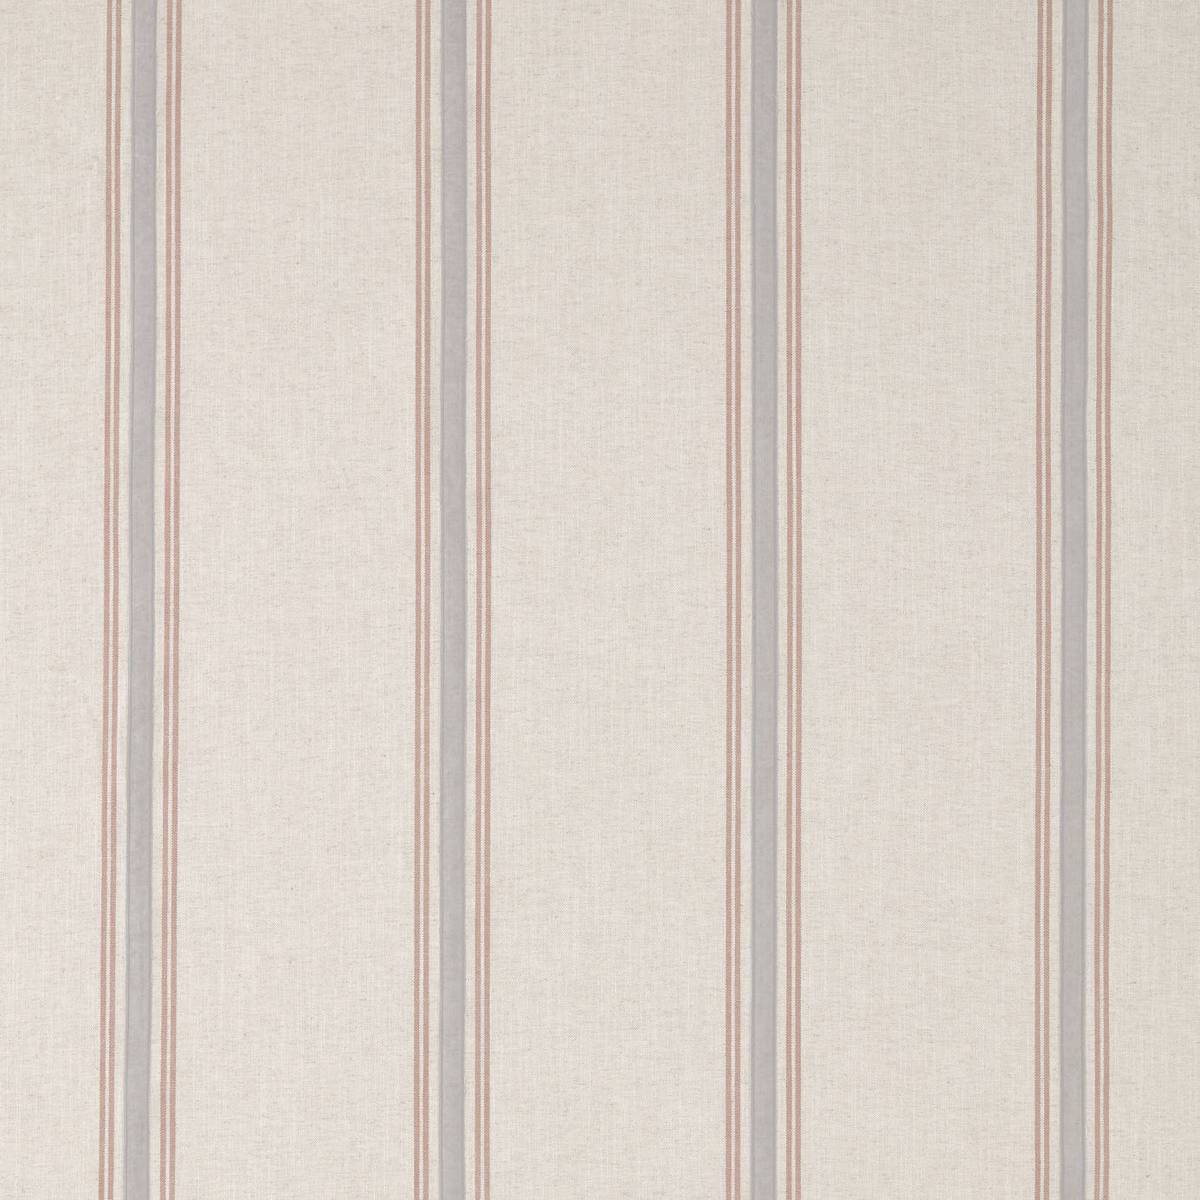 Hockley Stripe Brick Fabric by Sanderson